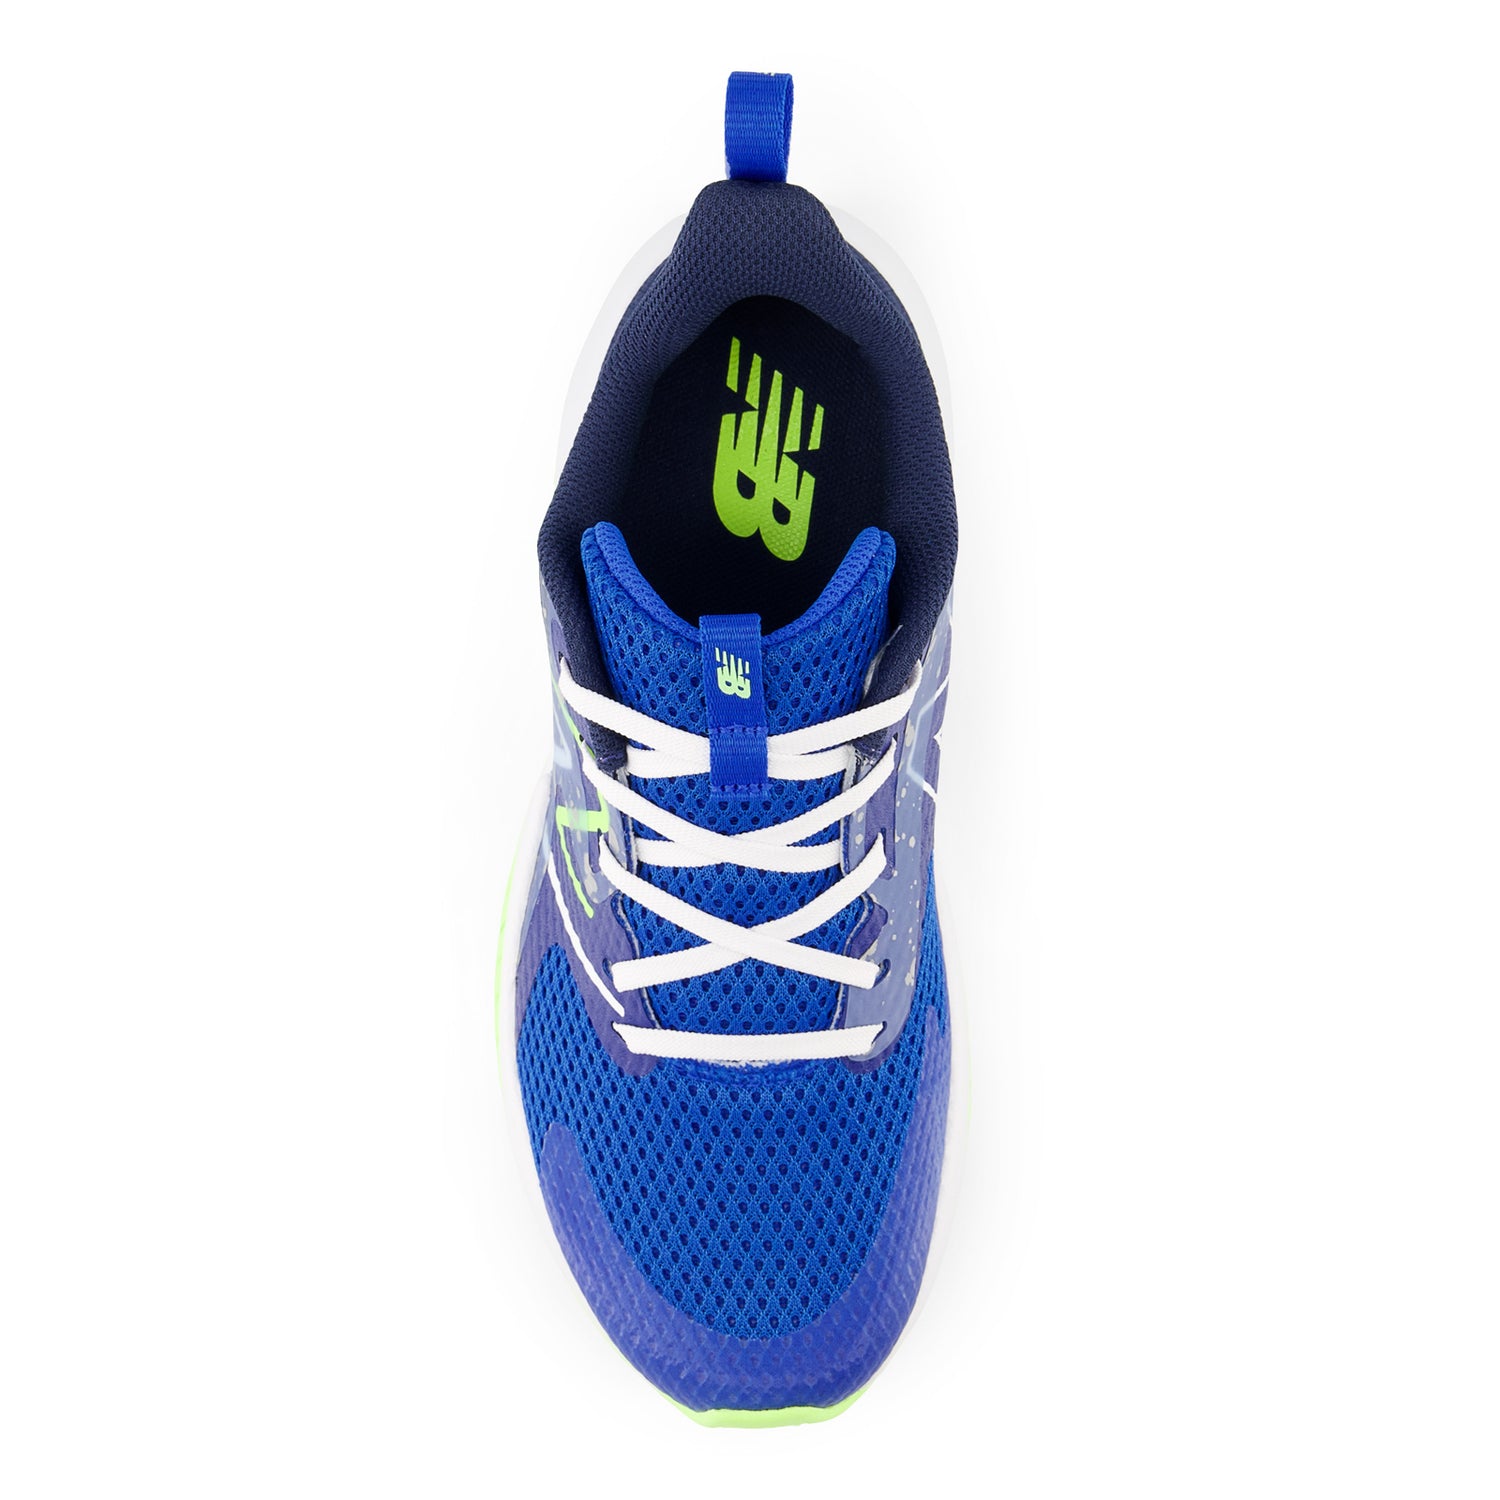 Peltz Shoes  Boy's New Balance Rave Run v2 Sneaker - Big Kid Blue Green GKRAVRB2